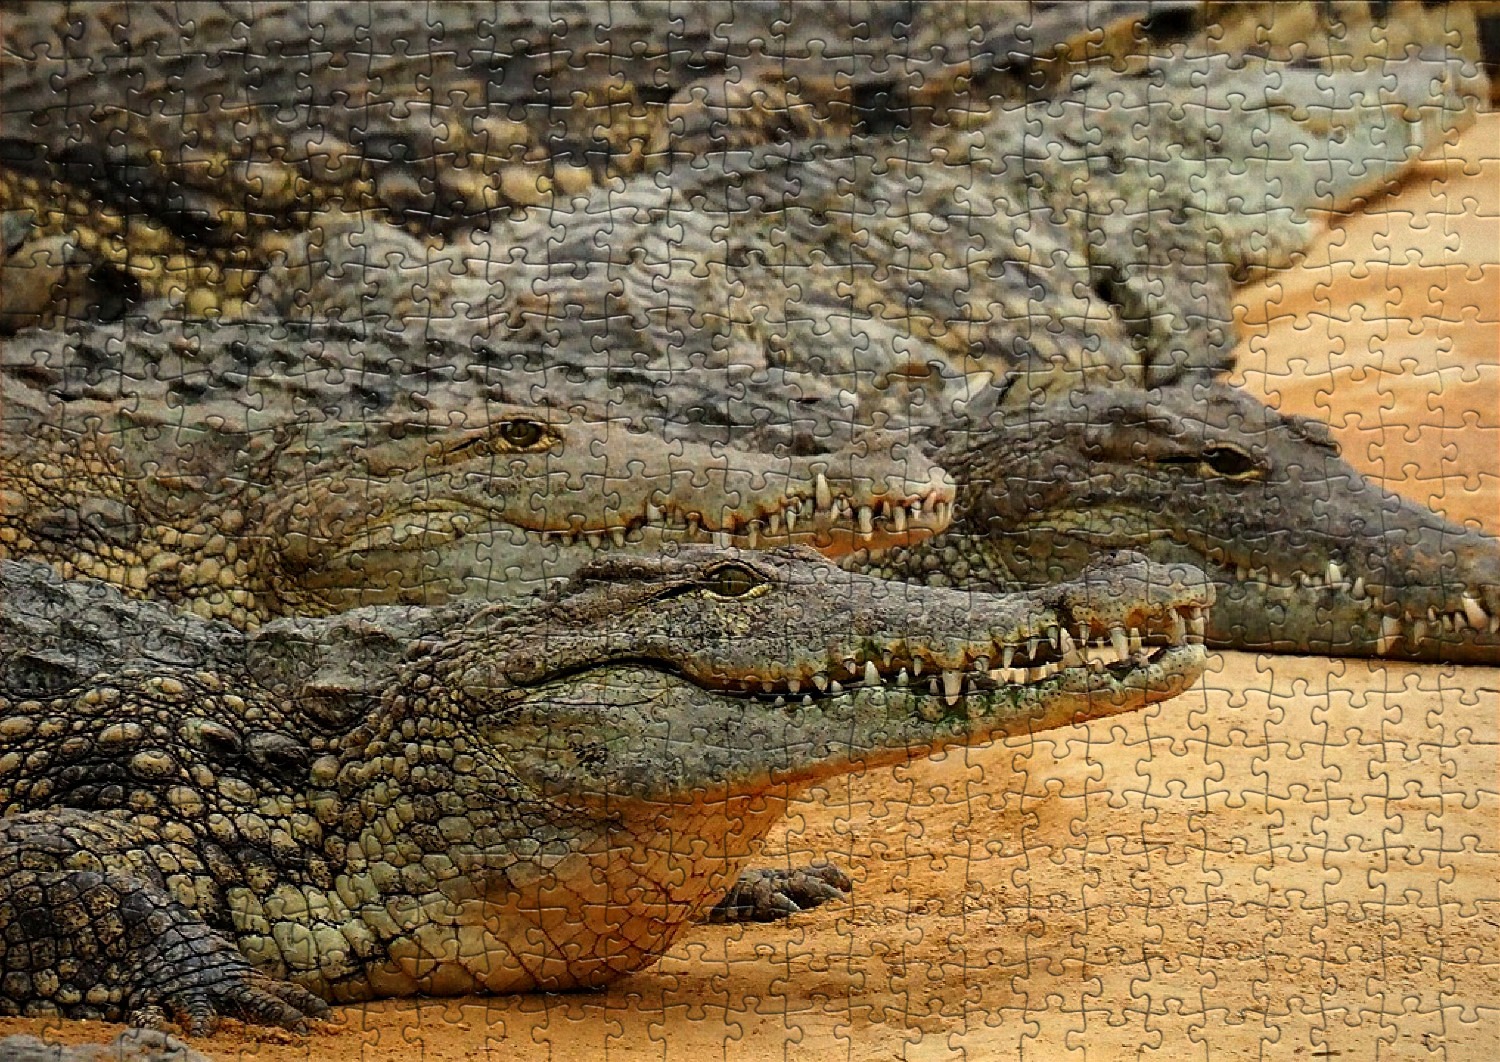 Les crocodiles en puzzles